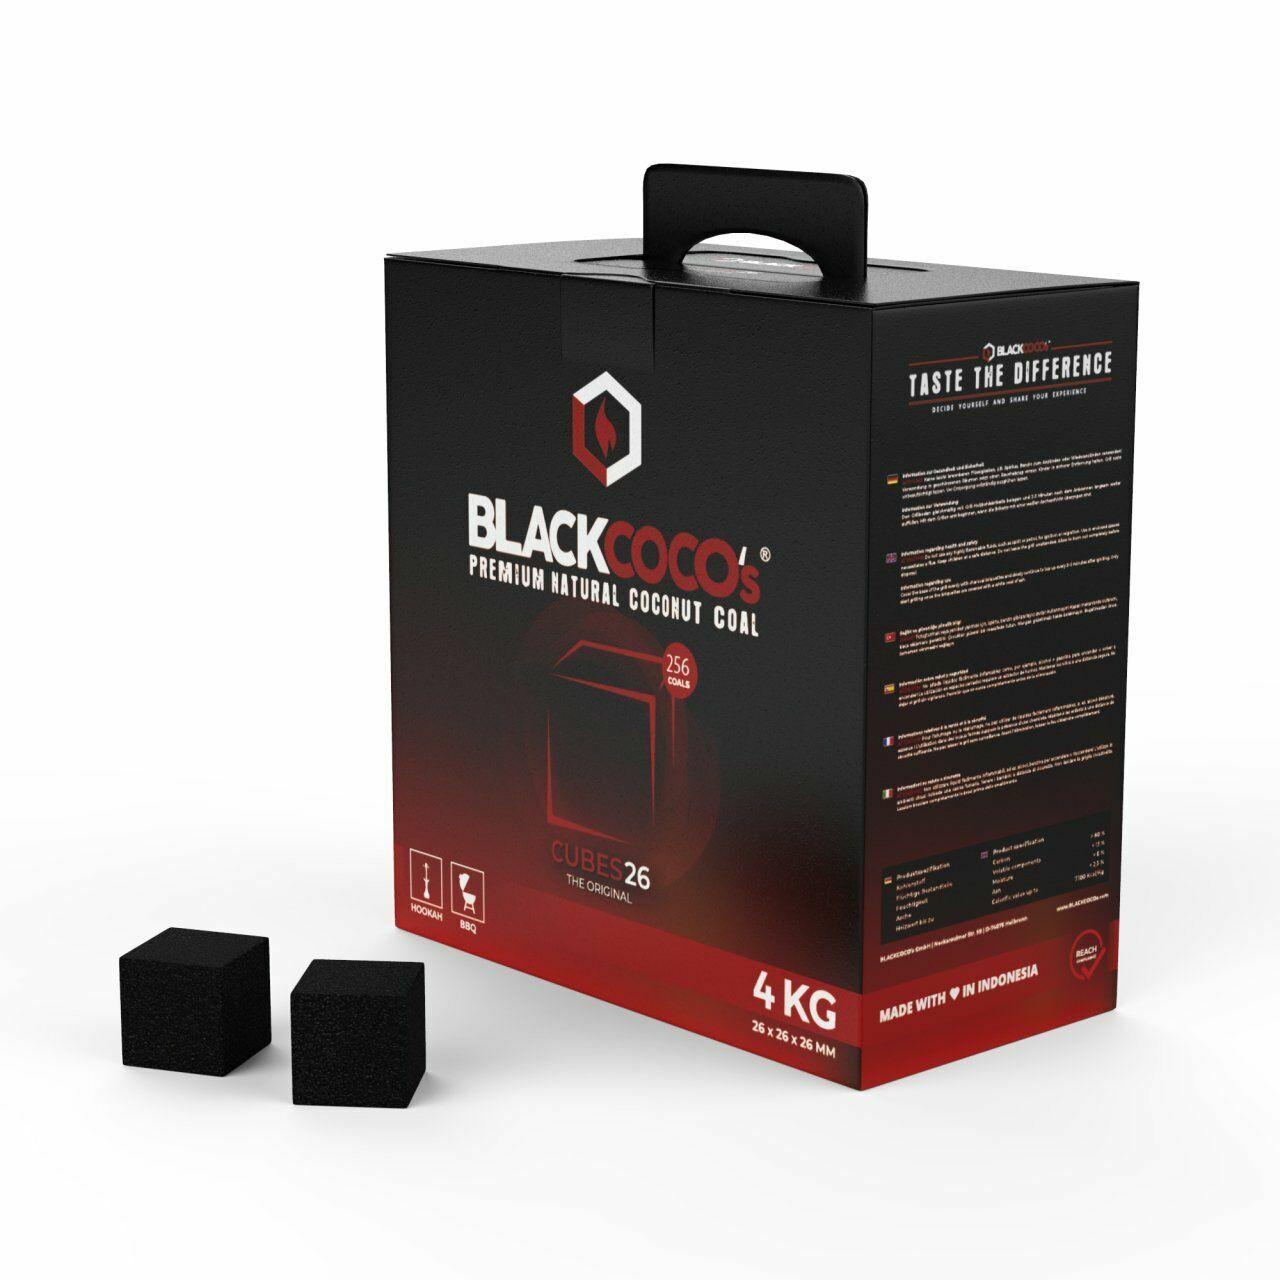 BLACKCOCOs Barbekü ve Nargile Kömürü  SmartBox 4KG  CUBES26